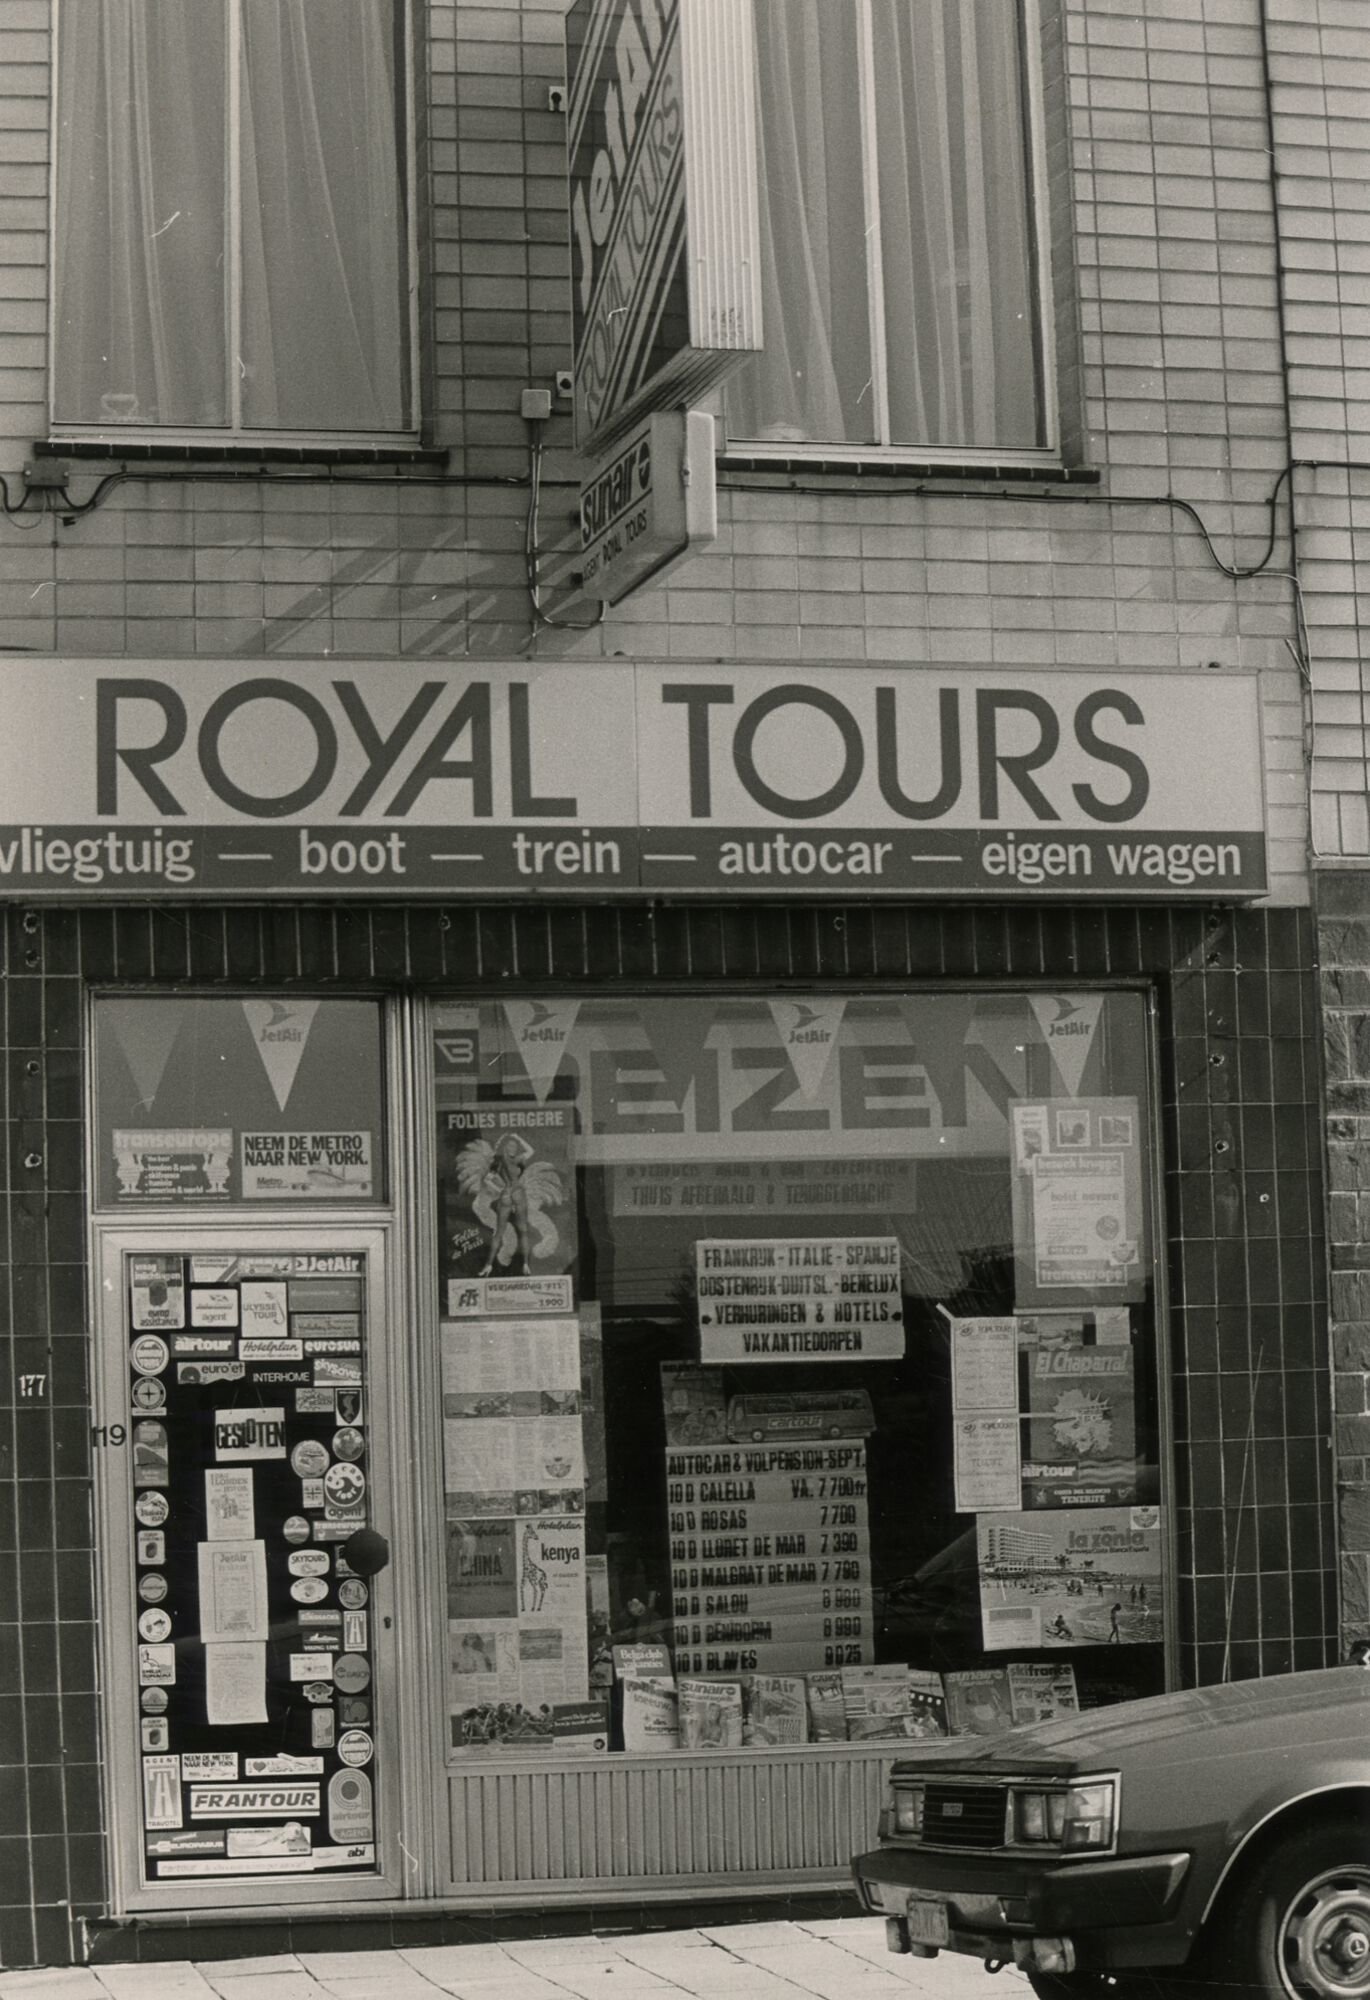 Etalage van reisbureau Royal Tours in Gent